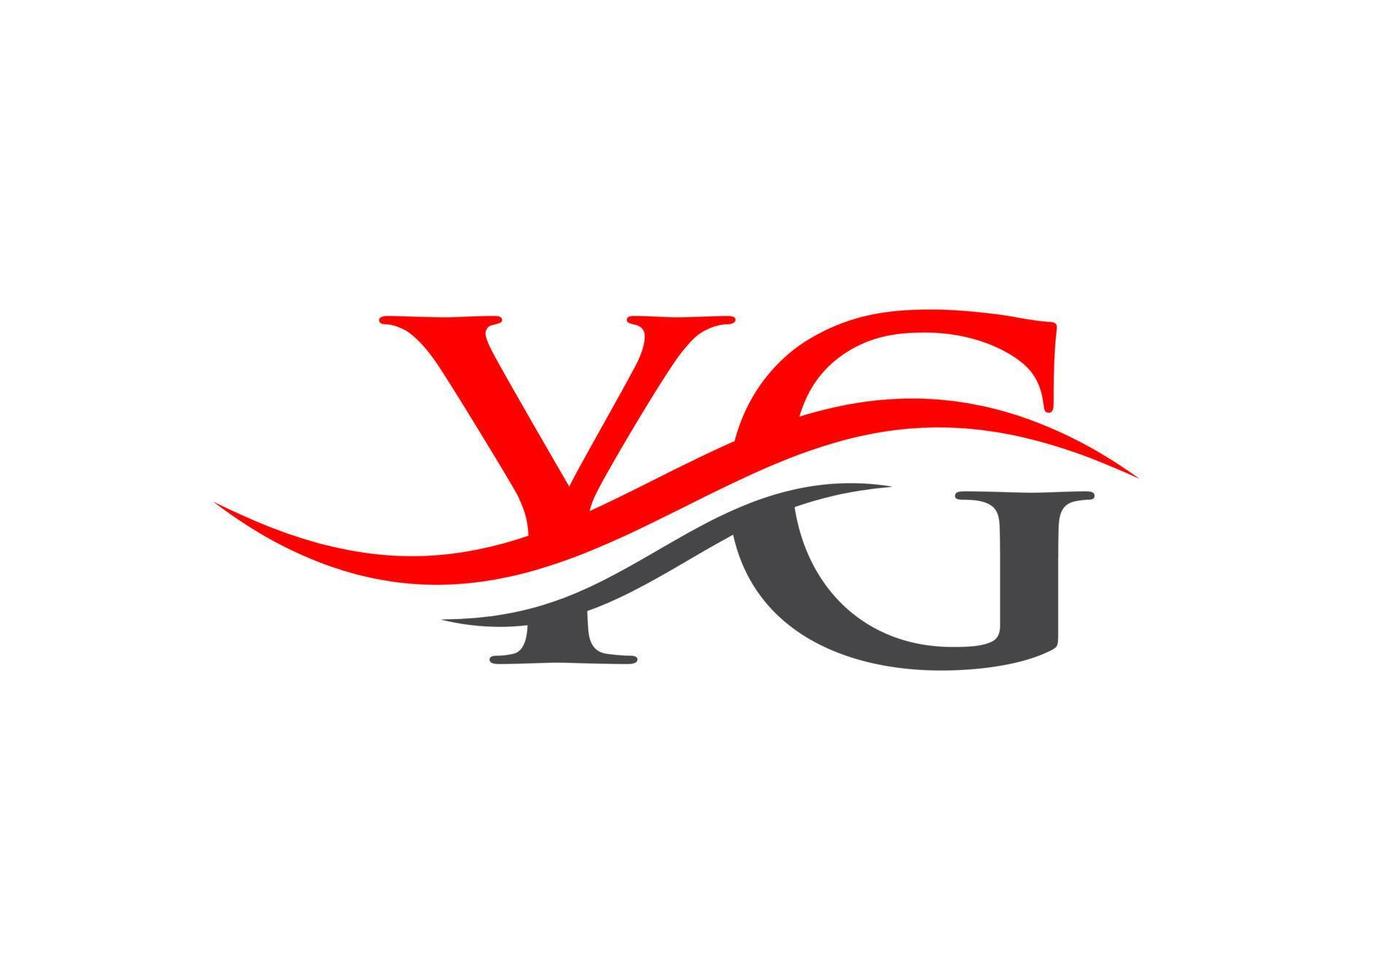 vetor de logotipo de onda de água yg. design de logotipo de letra swoosh yg para negócios e identidade da empresa